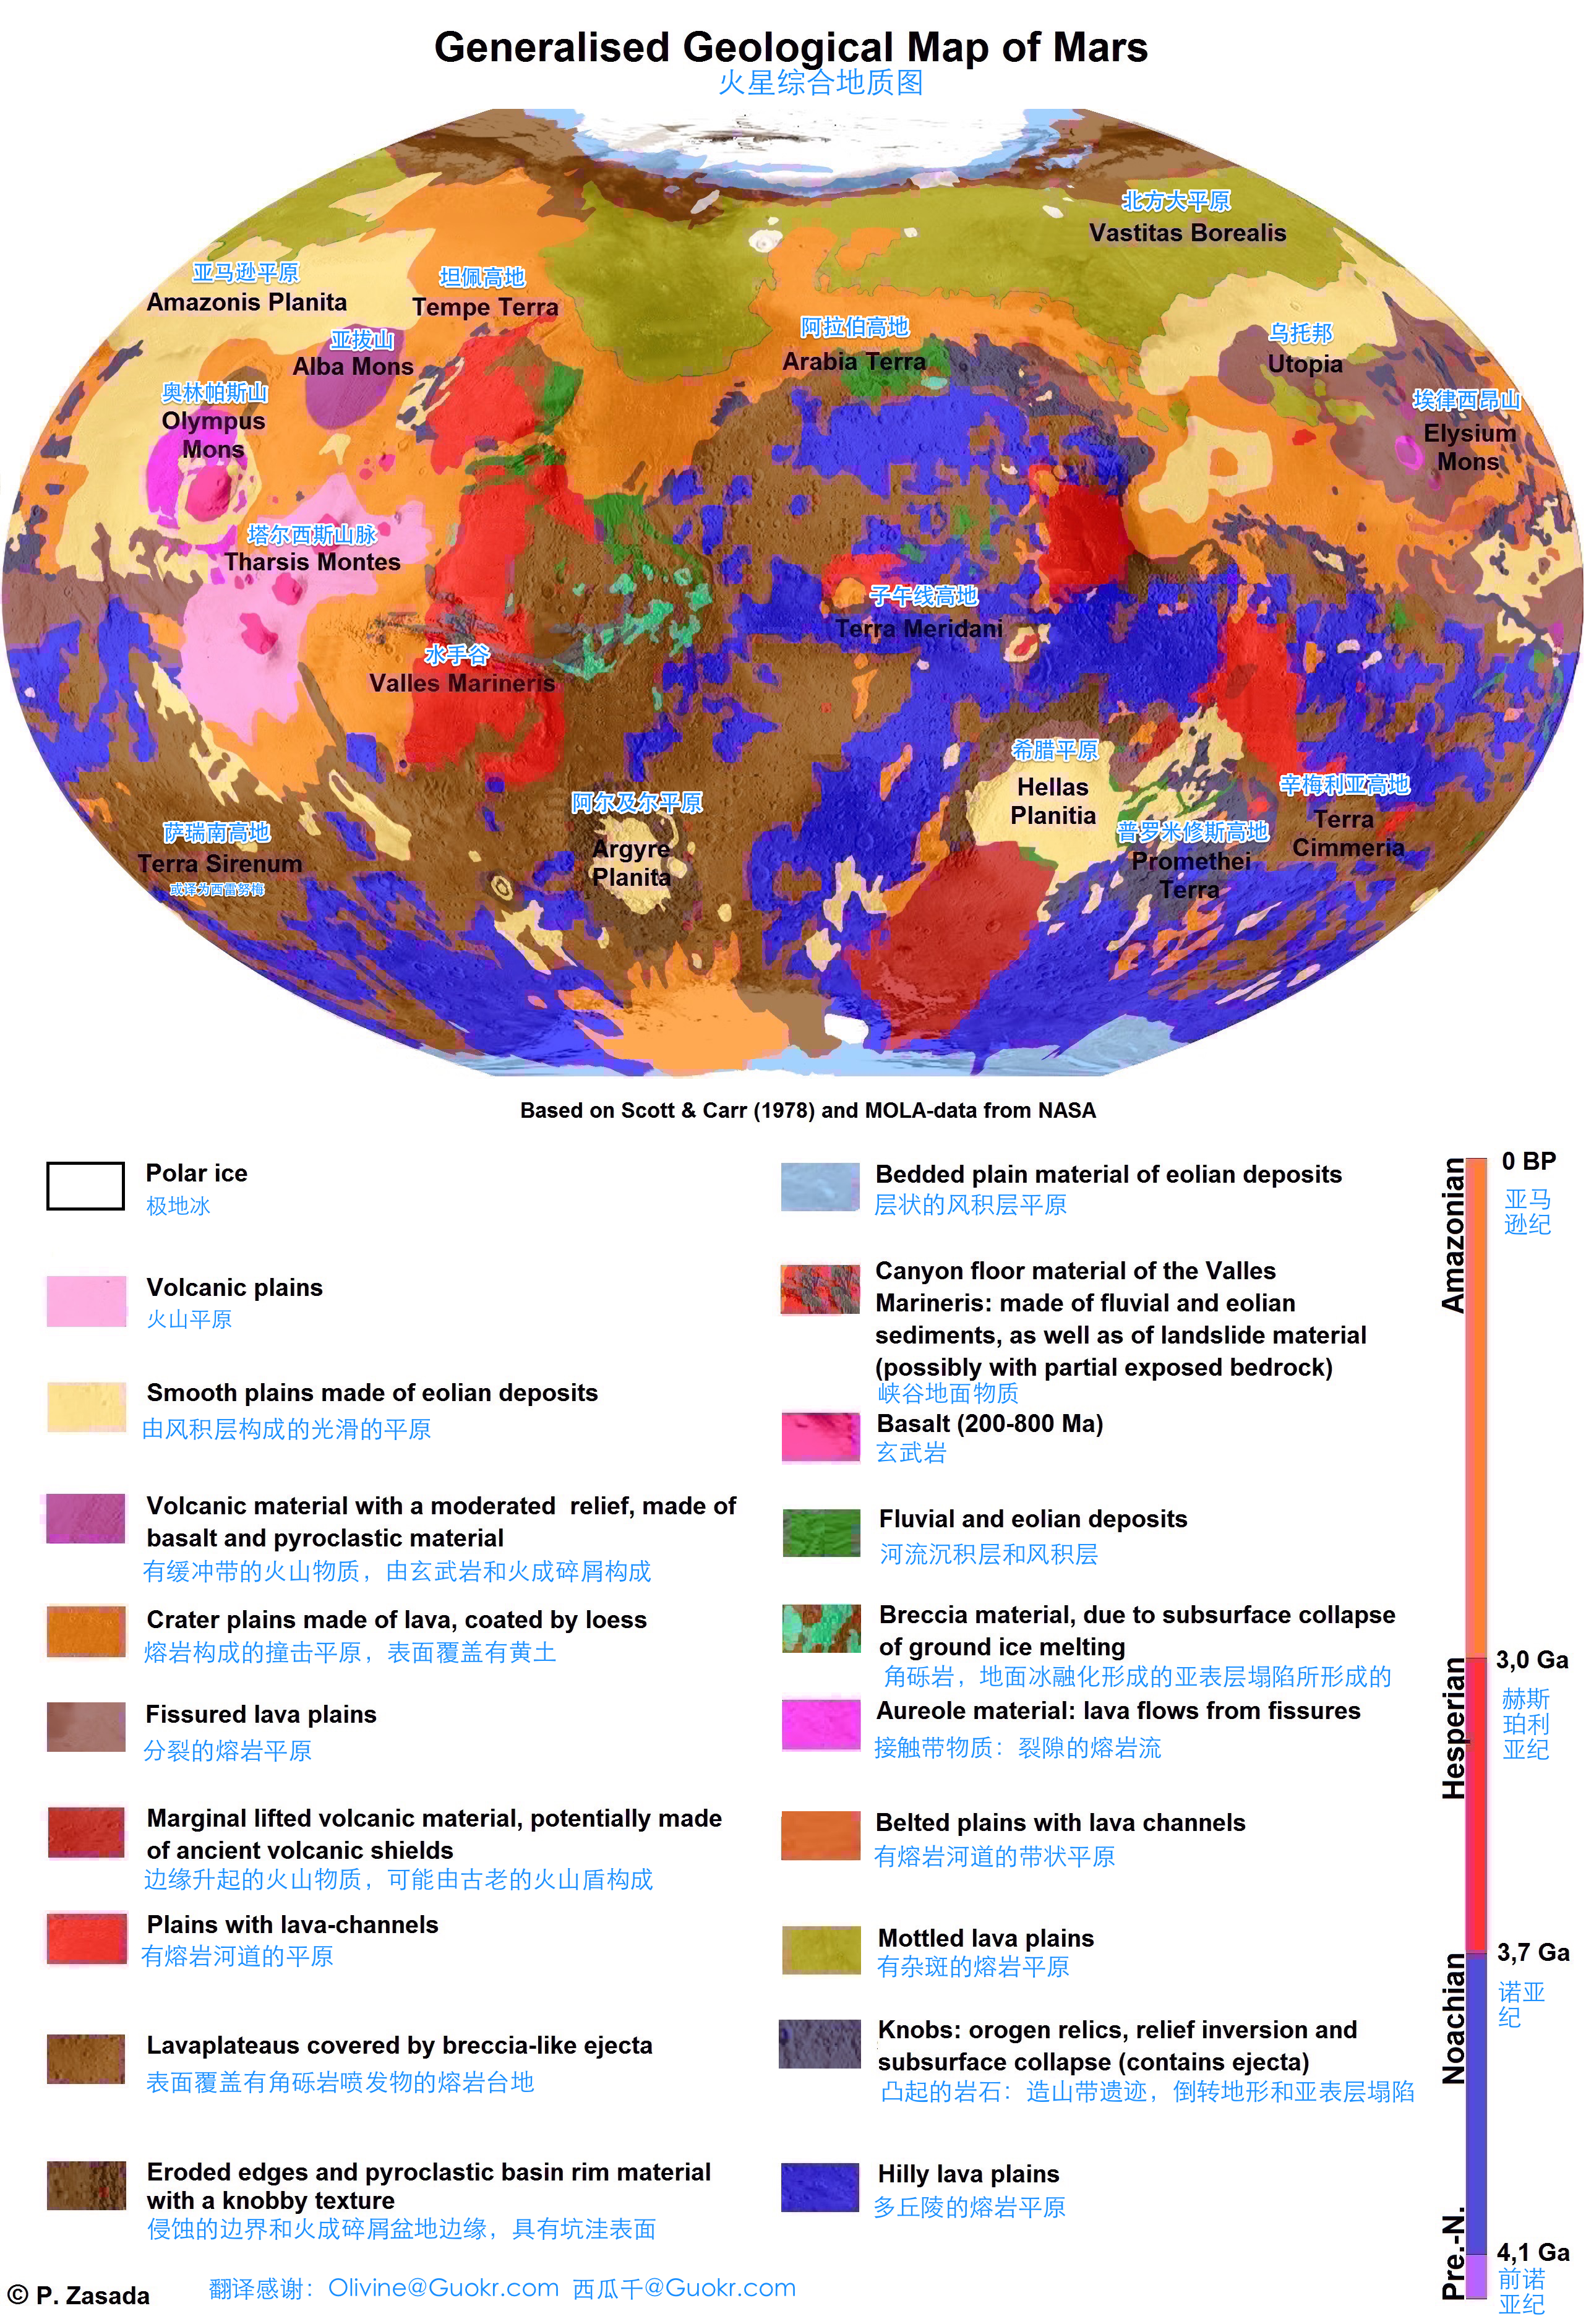 翻译自 维基百科:Generalised Geological Map of Mars.jpg。按照原图片的要求，翻译之后图片使用 Creative Commons Attribution-Share Alike 3.0 Unported 协议共享。原作者为 Patrick Zasada。